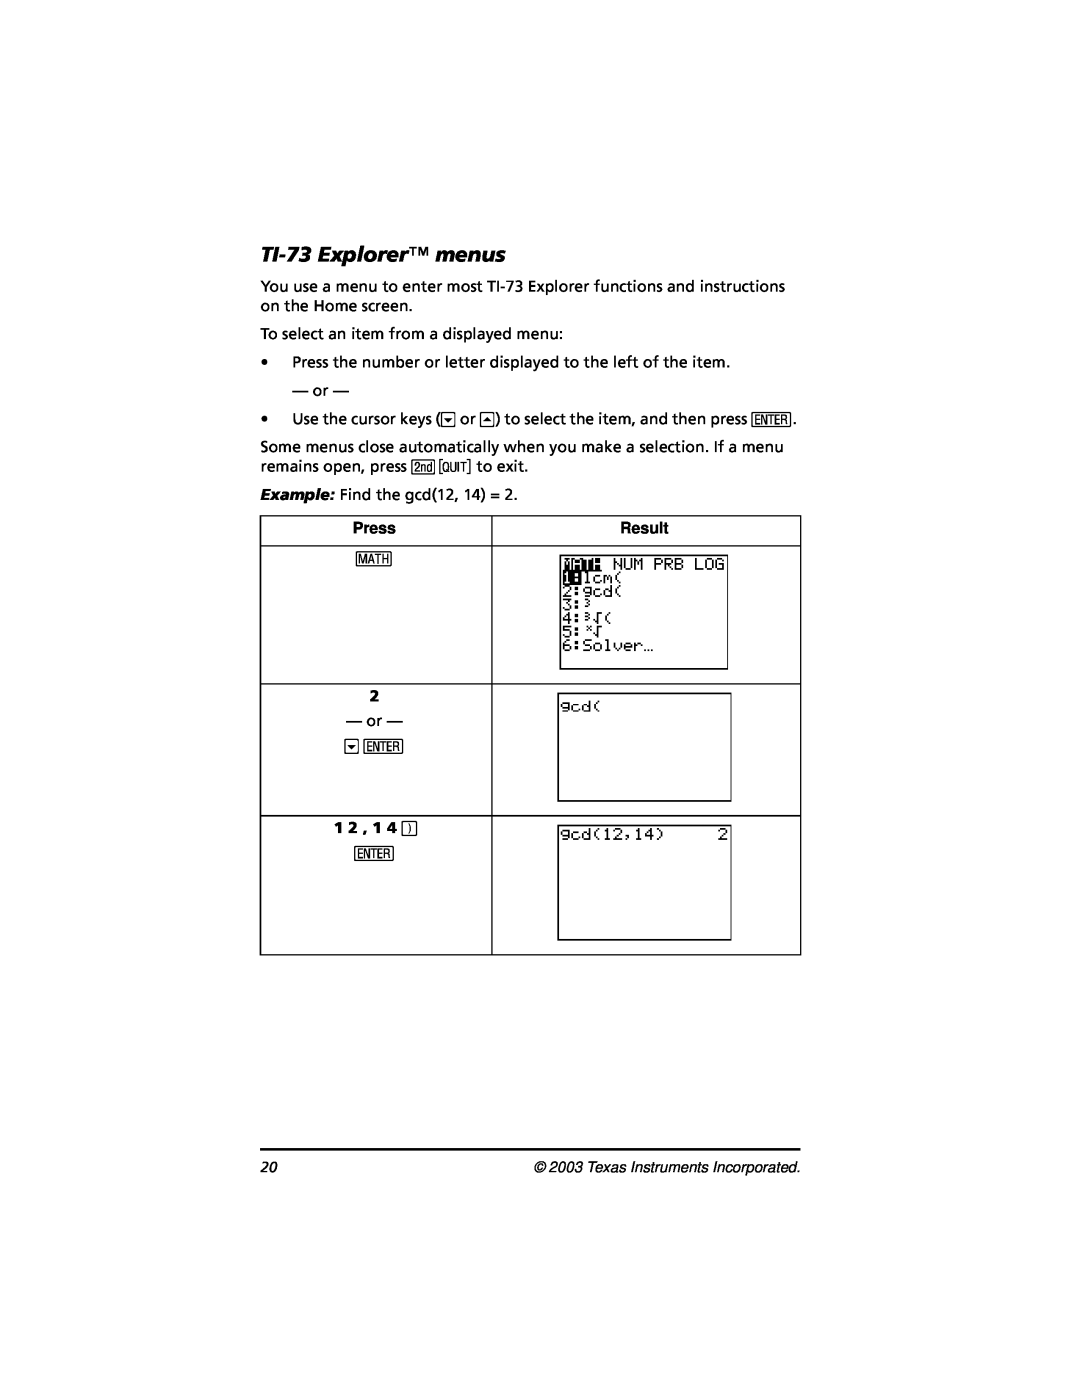 Texas Instruments CBL 2 manual TI-73 Explorer menus, 1 2 , 1 4 ¤, Press, Result 